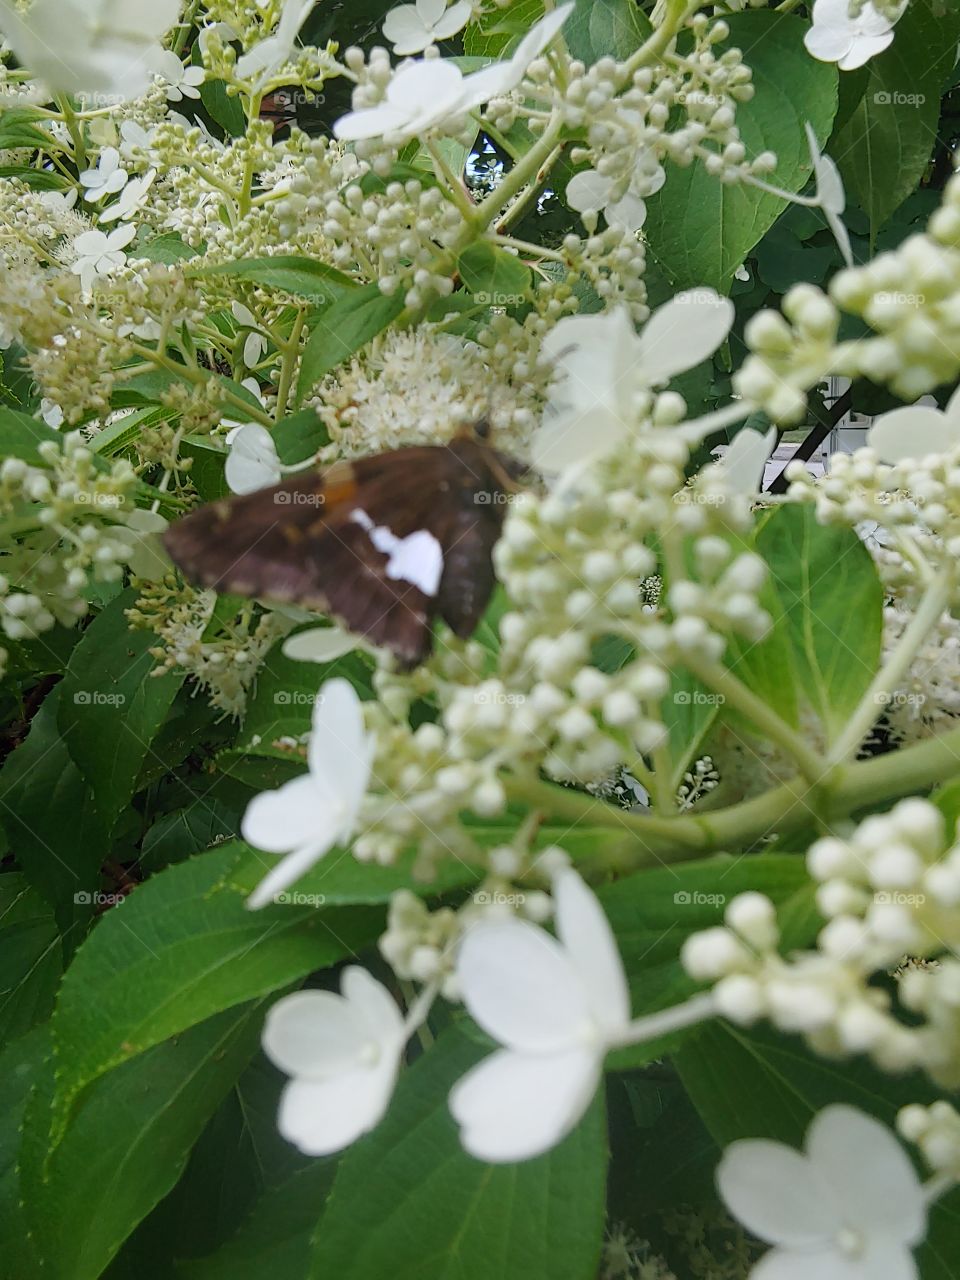 nectar lovin butterfly